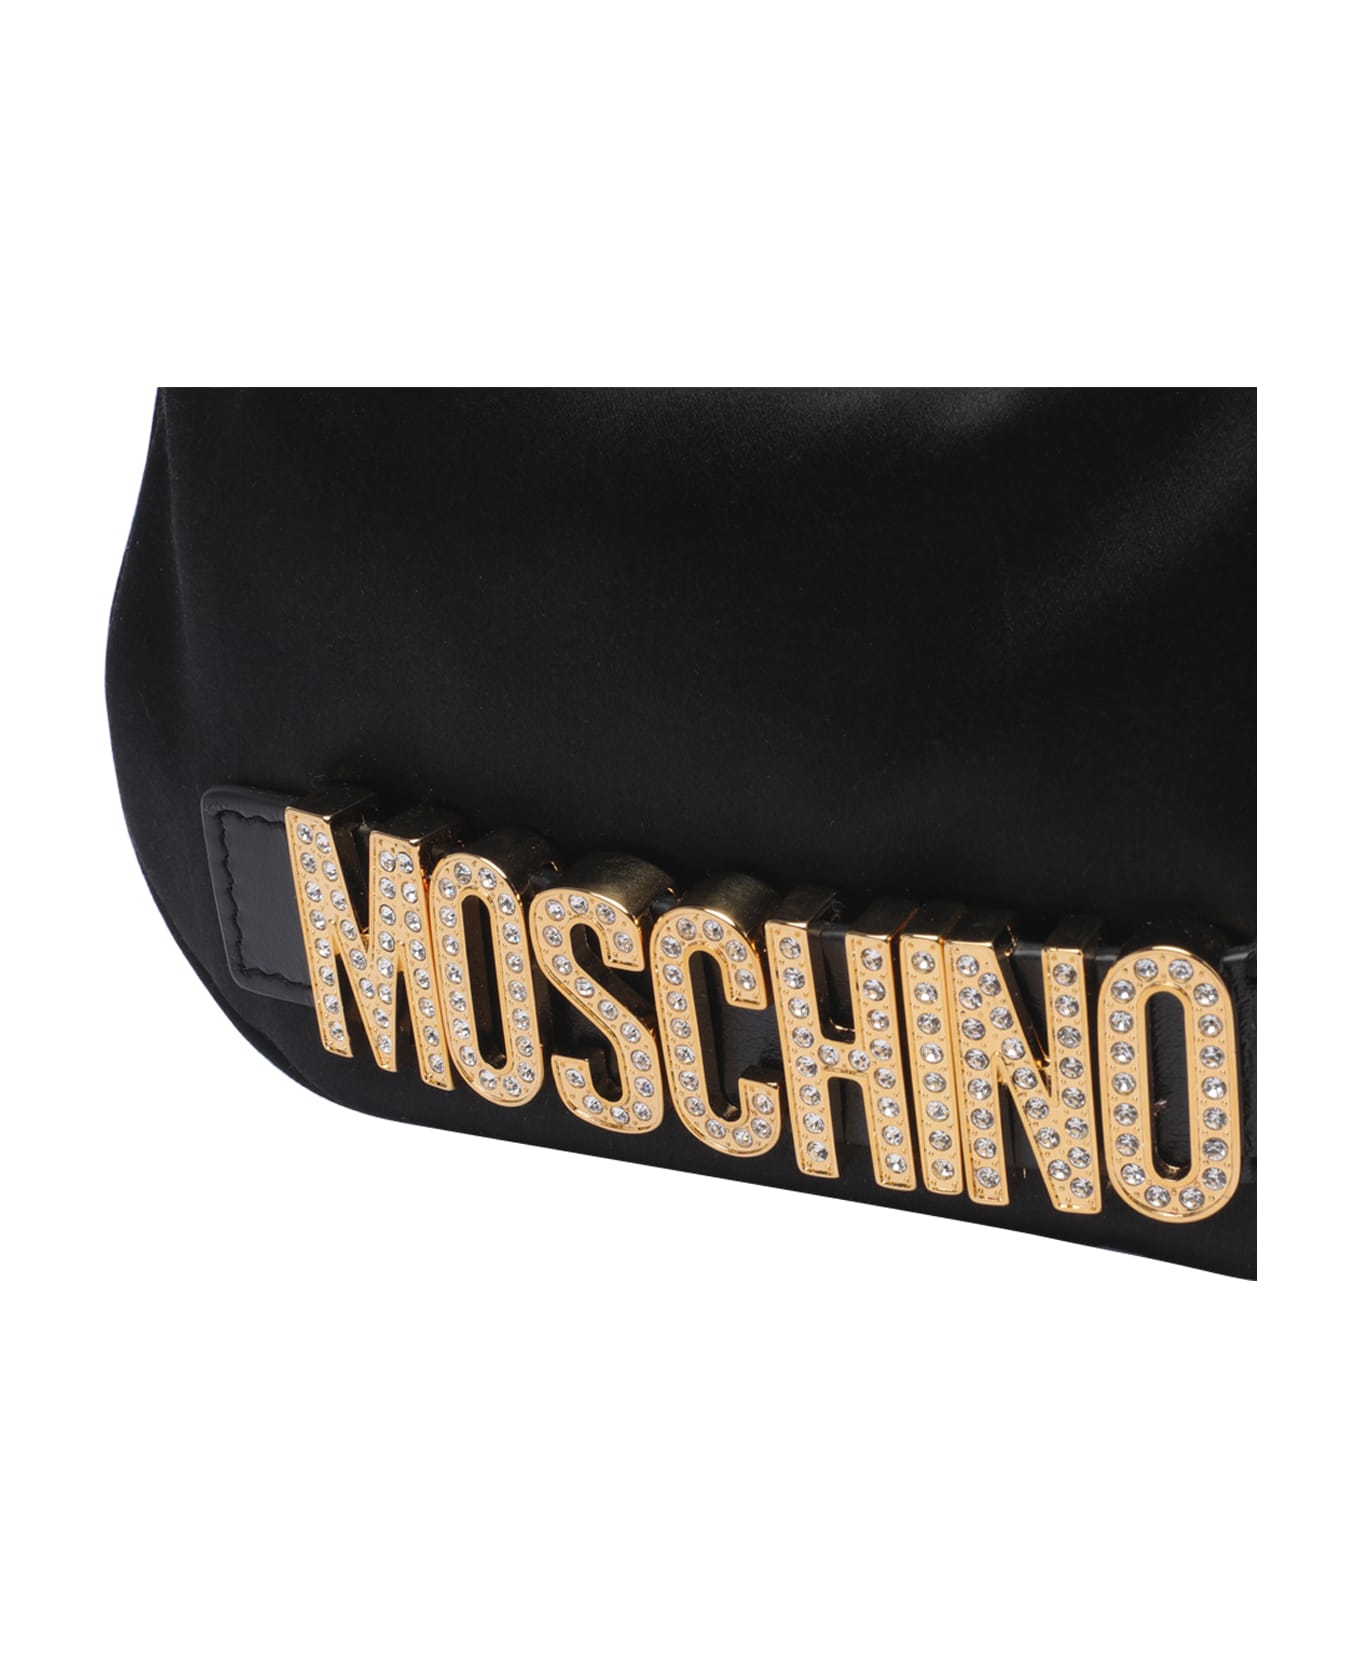 Moschino Lettering Shoulder Bag - Fantasia Nero